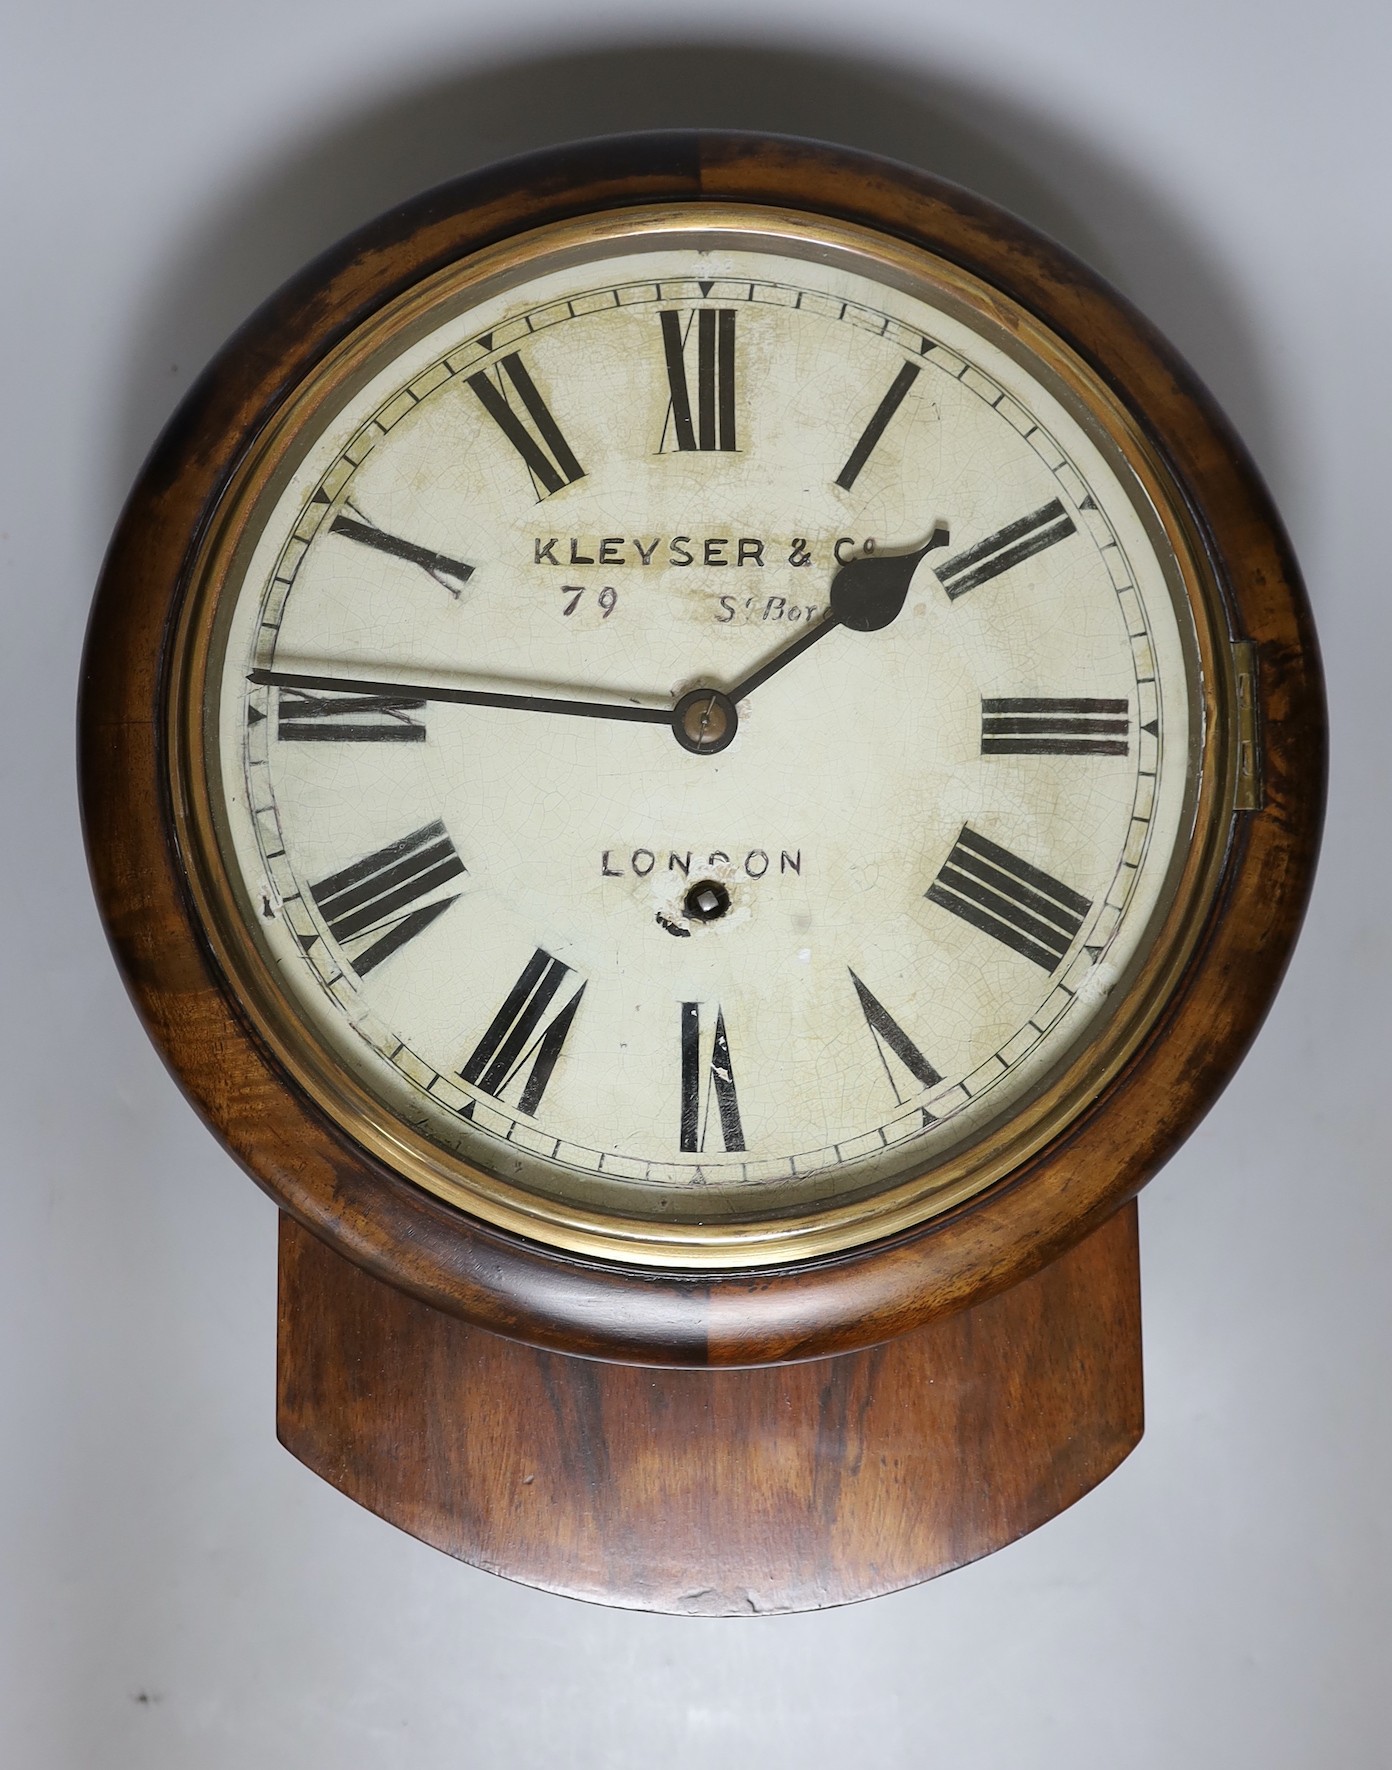 A drop dial clock by Kleyser & Co, London, 39cms high